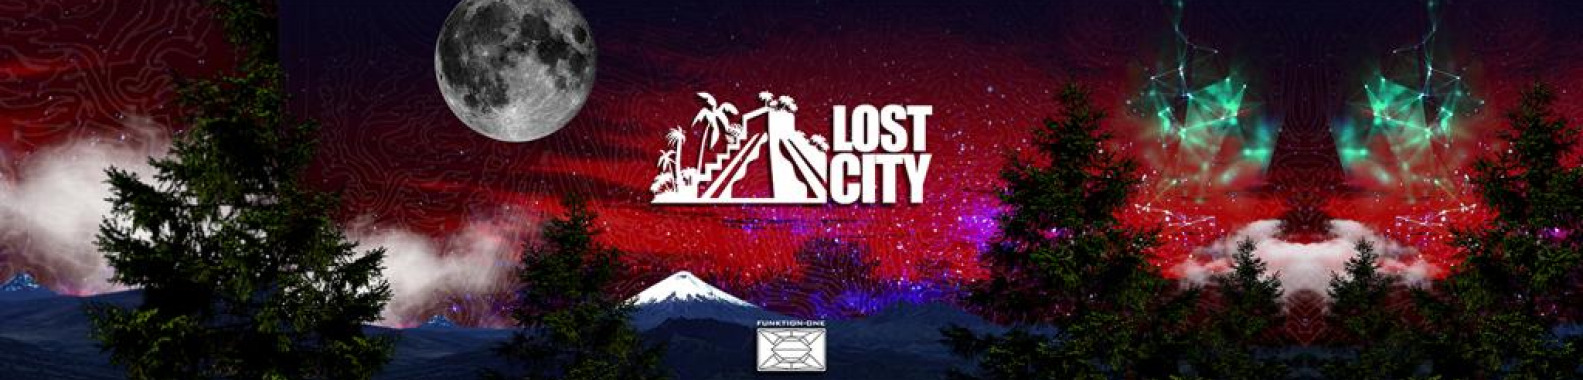 Lost City club